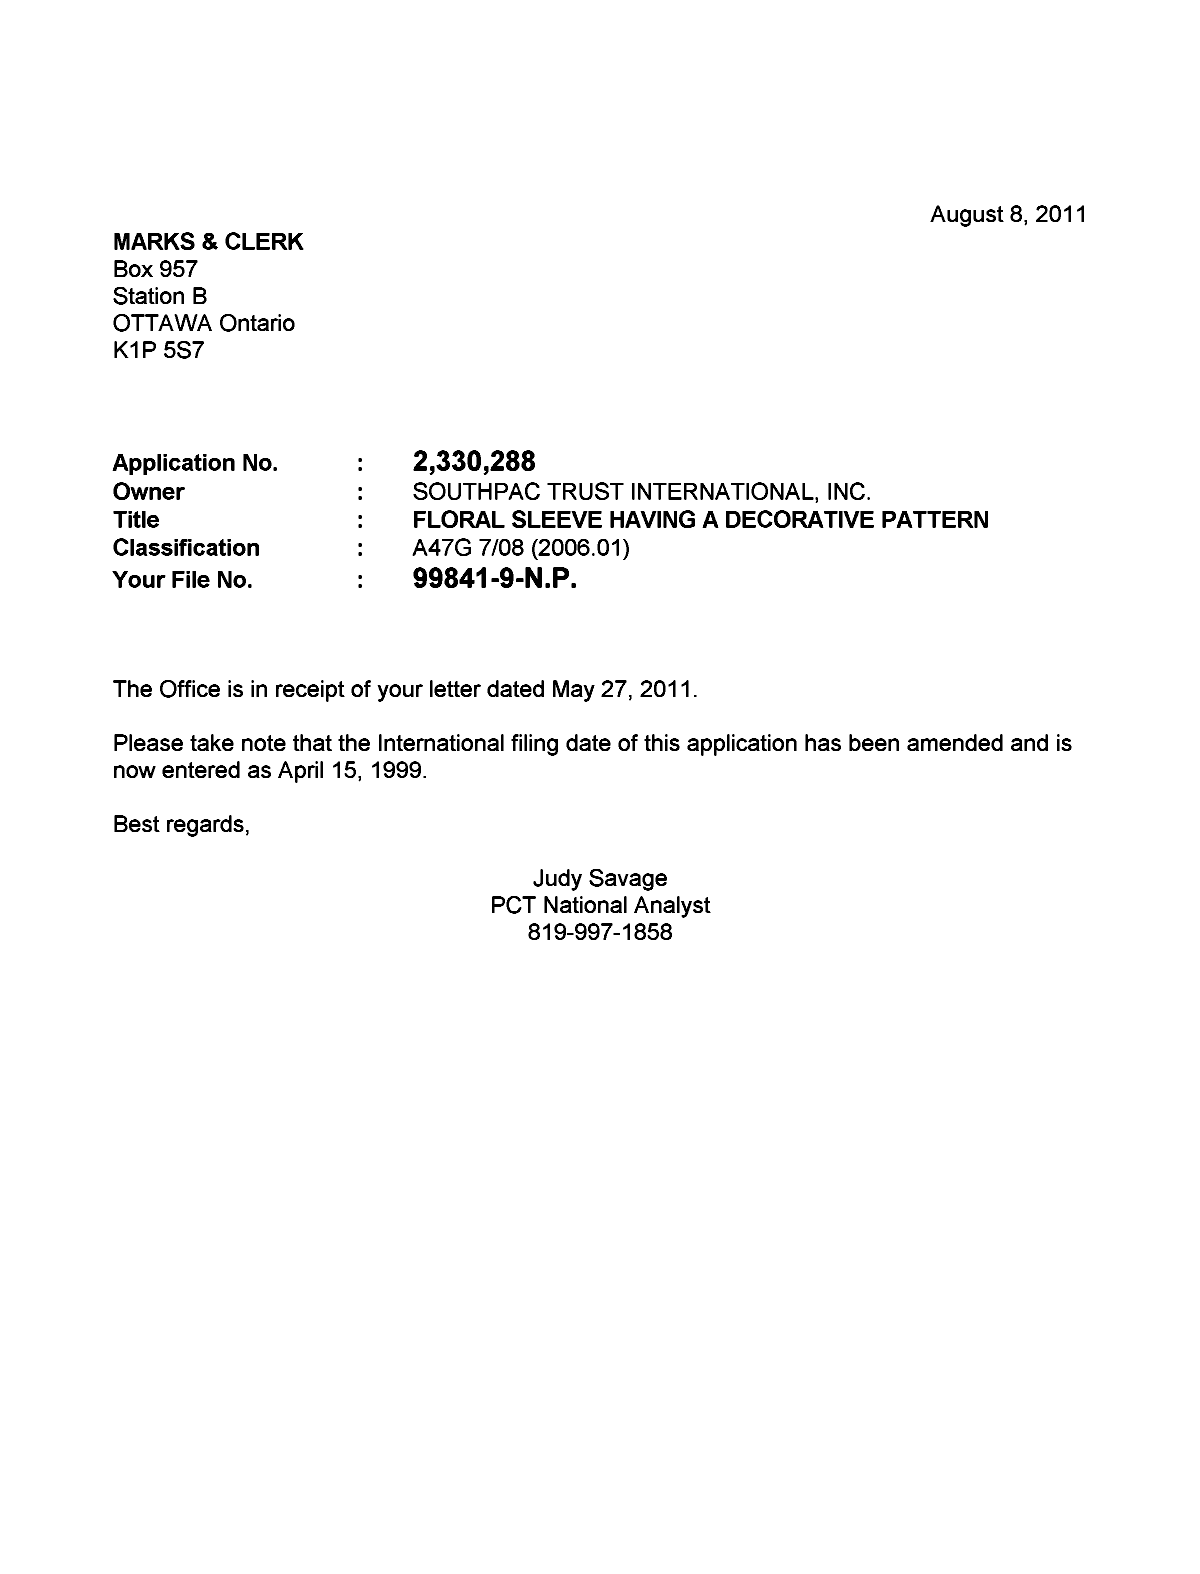 Canadian Patent Document 2330288. Correspondence 20110808. Image 1 of 1